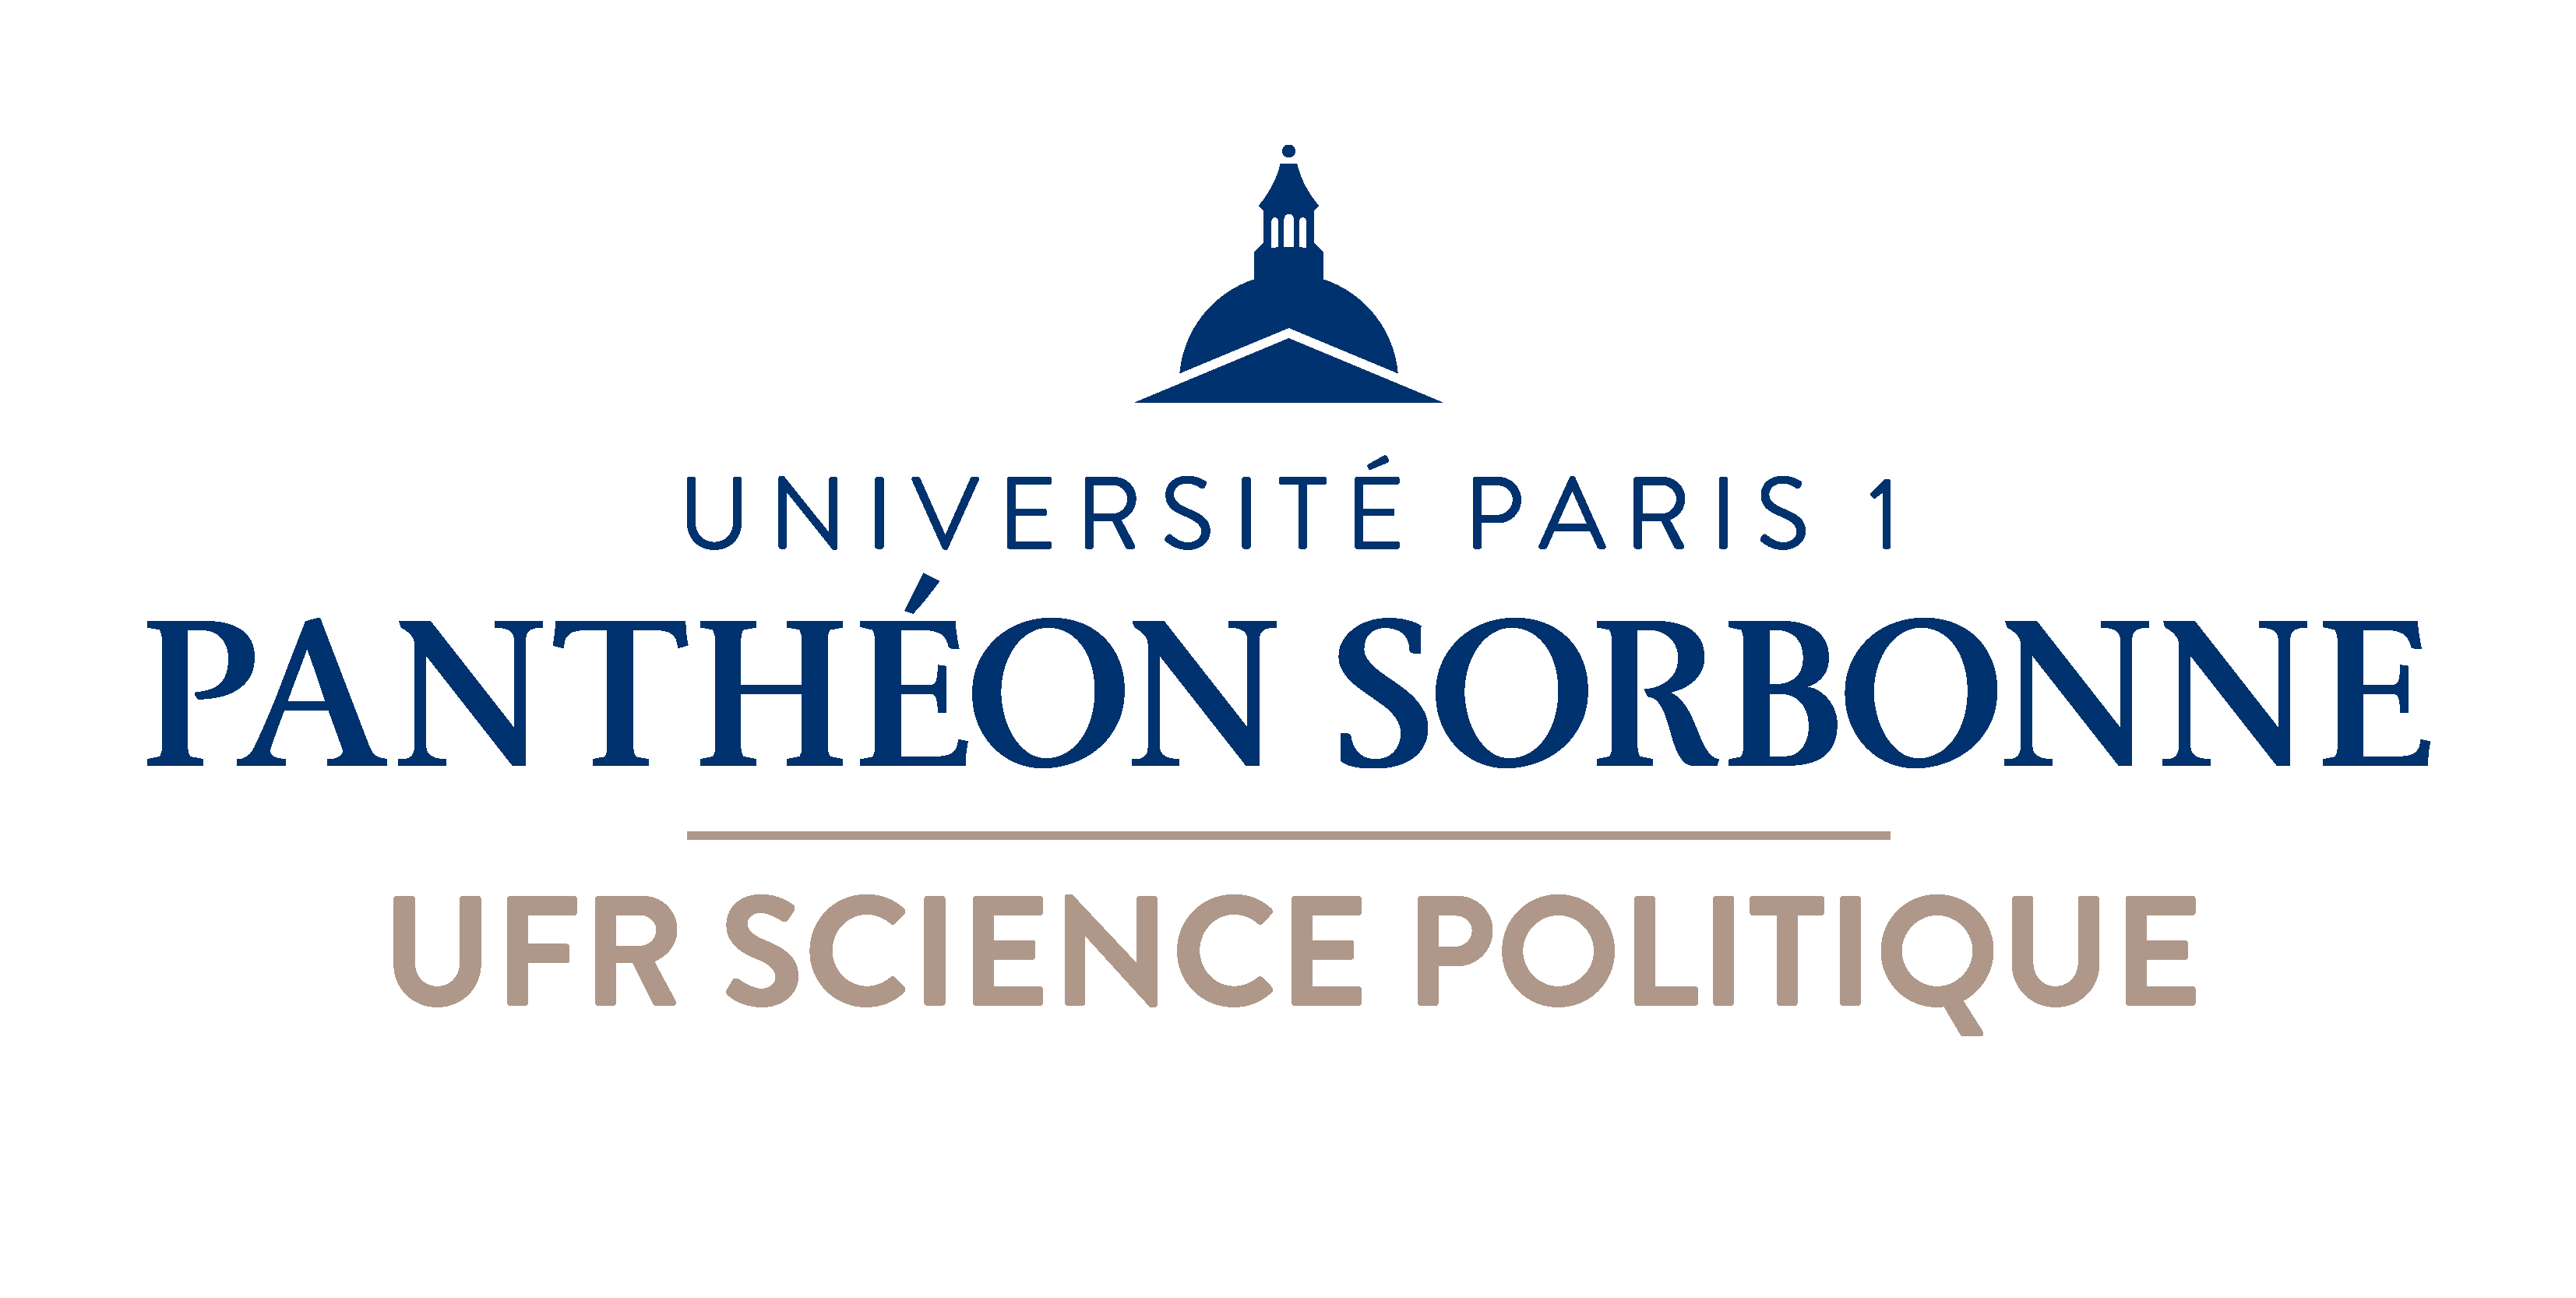 UFR Science politique